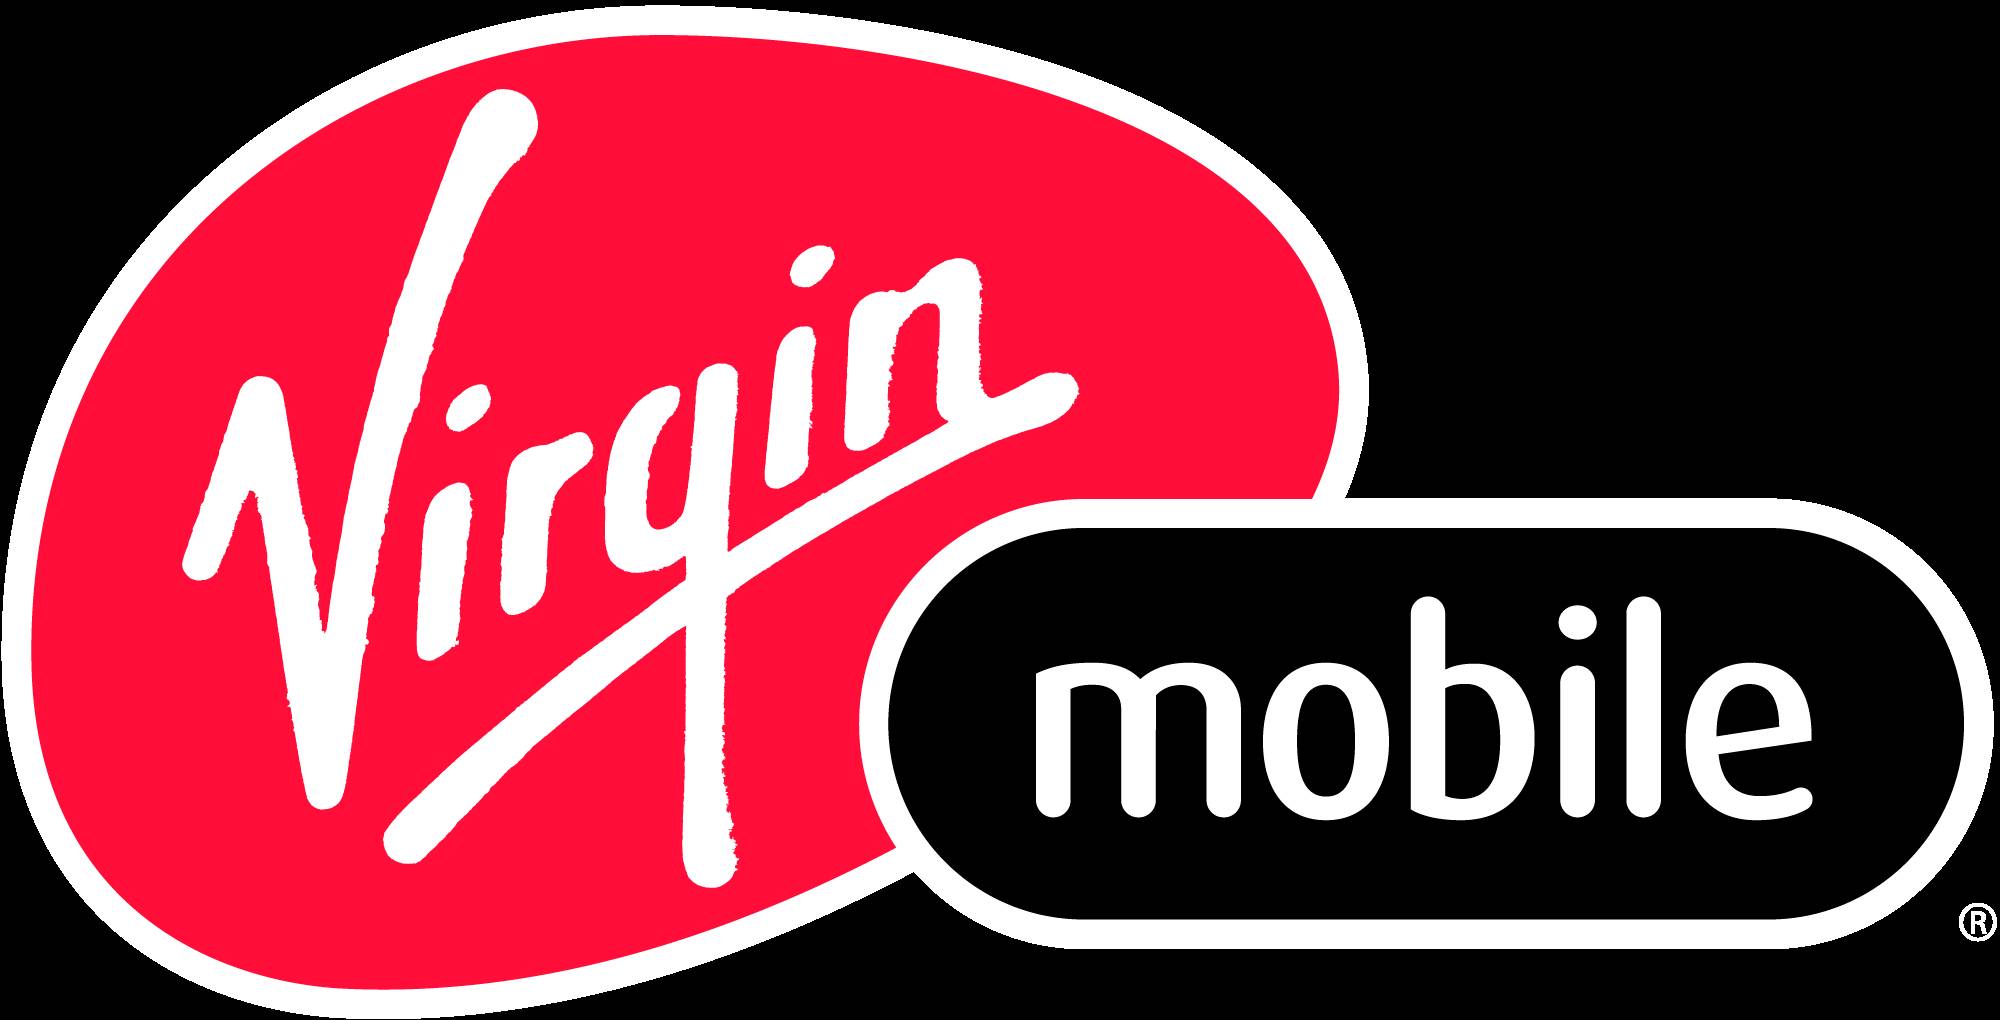 Virgin Mobile Usalogo